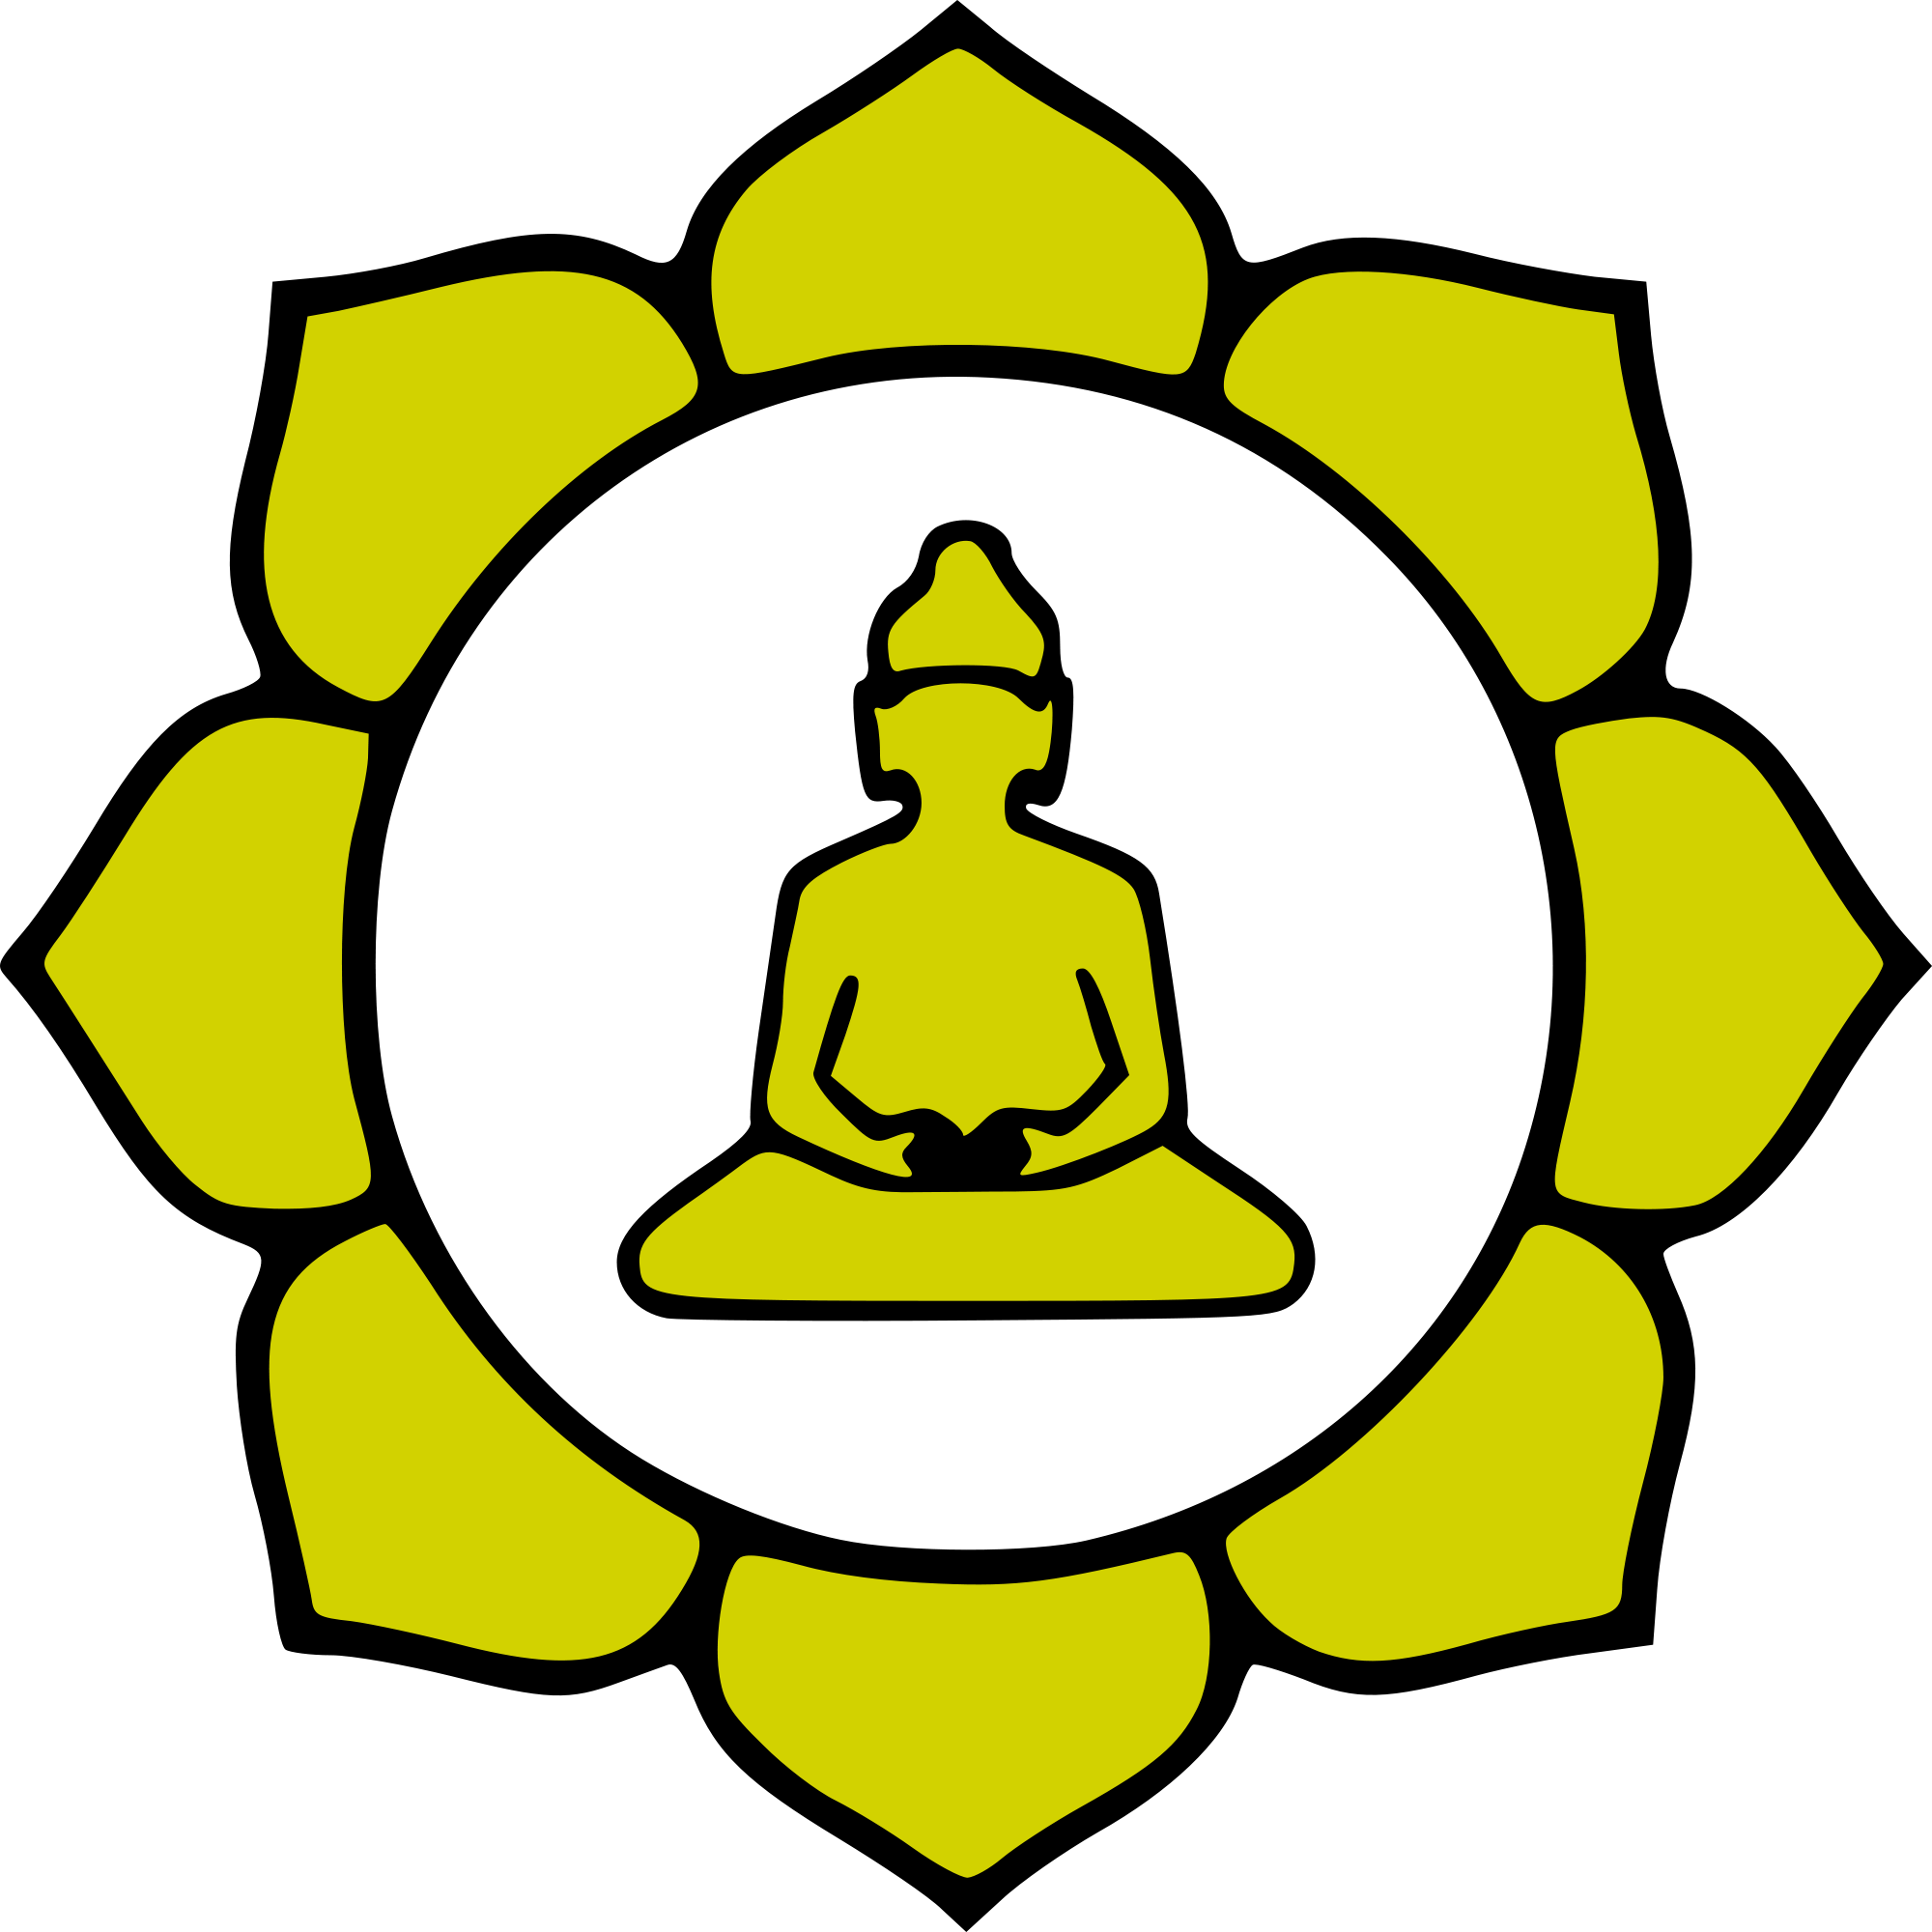 lotus clipart buddhism